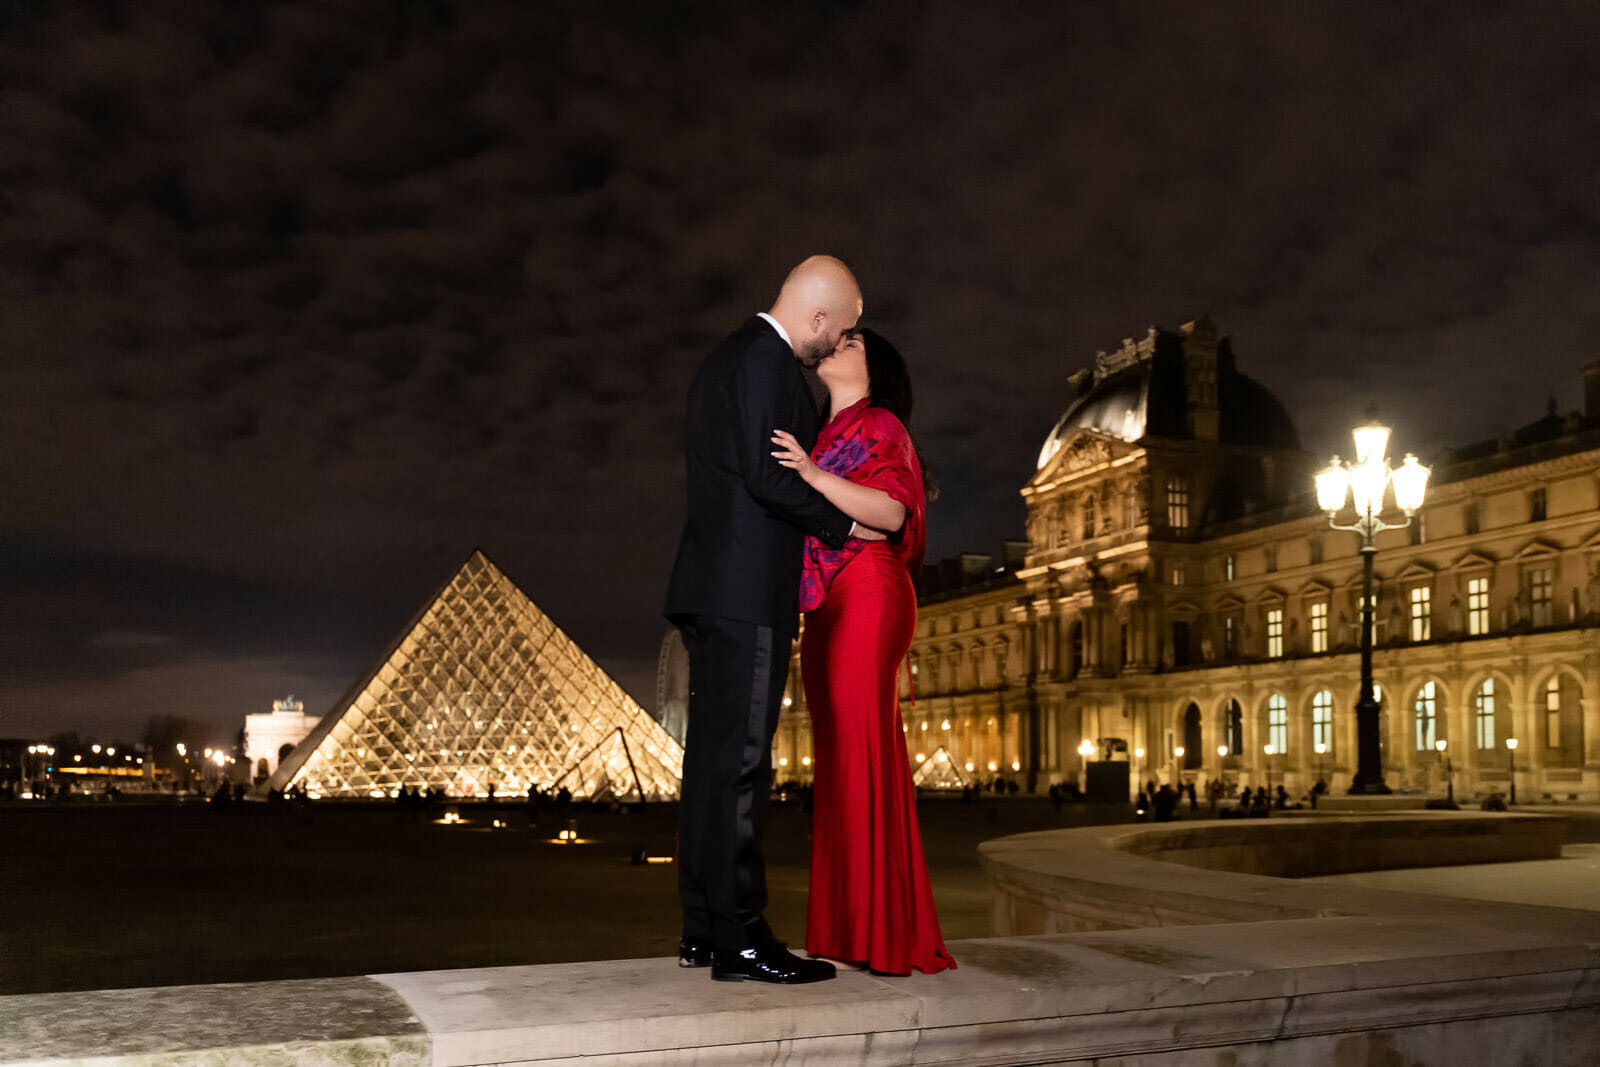 Super romantic Paris engagement photoshoot at night at the Louvre Museum